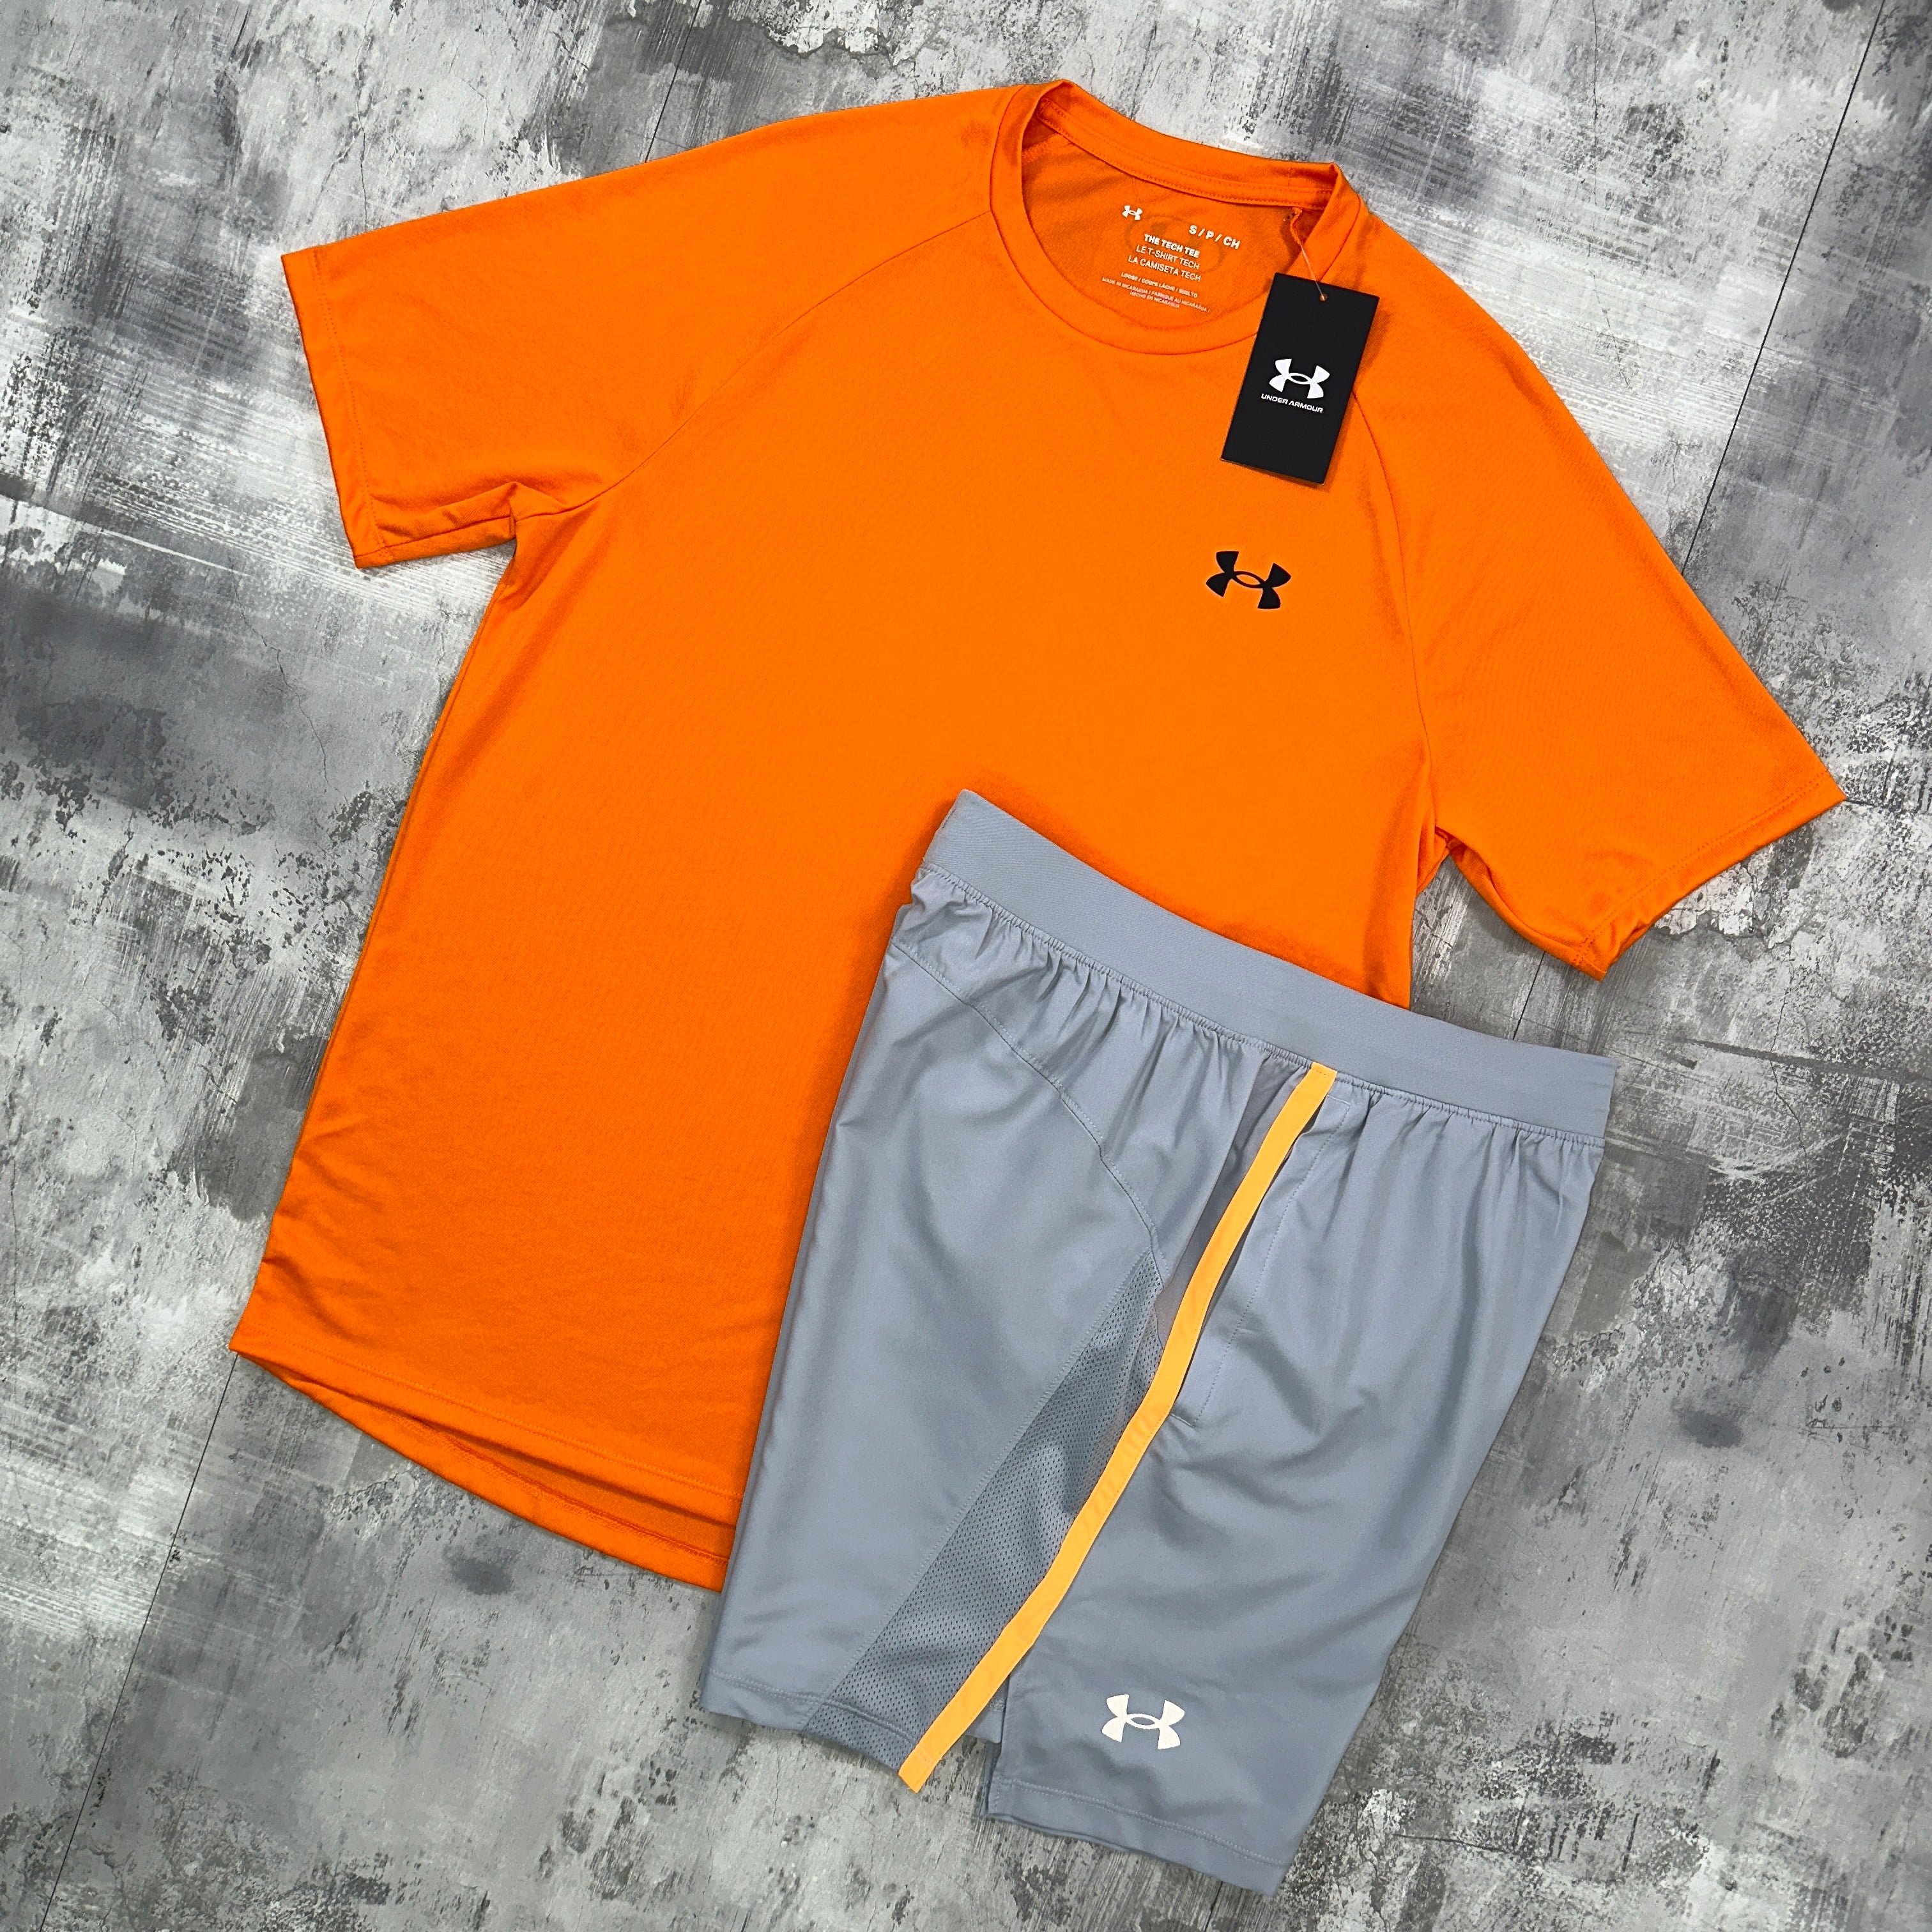 Under Armour Launch set Orange - t-shirt and shorts